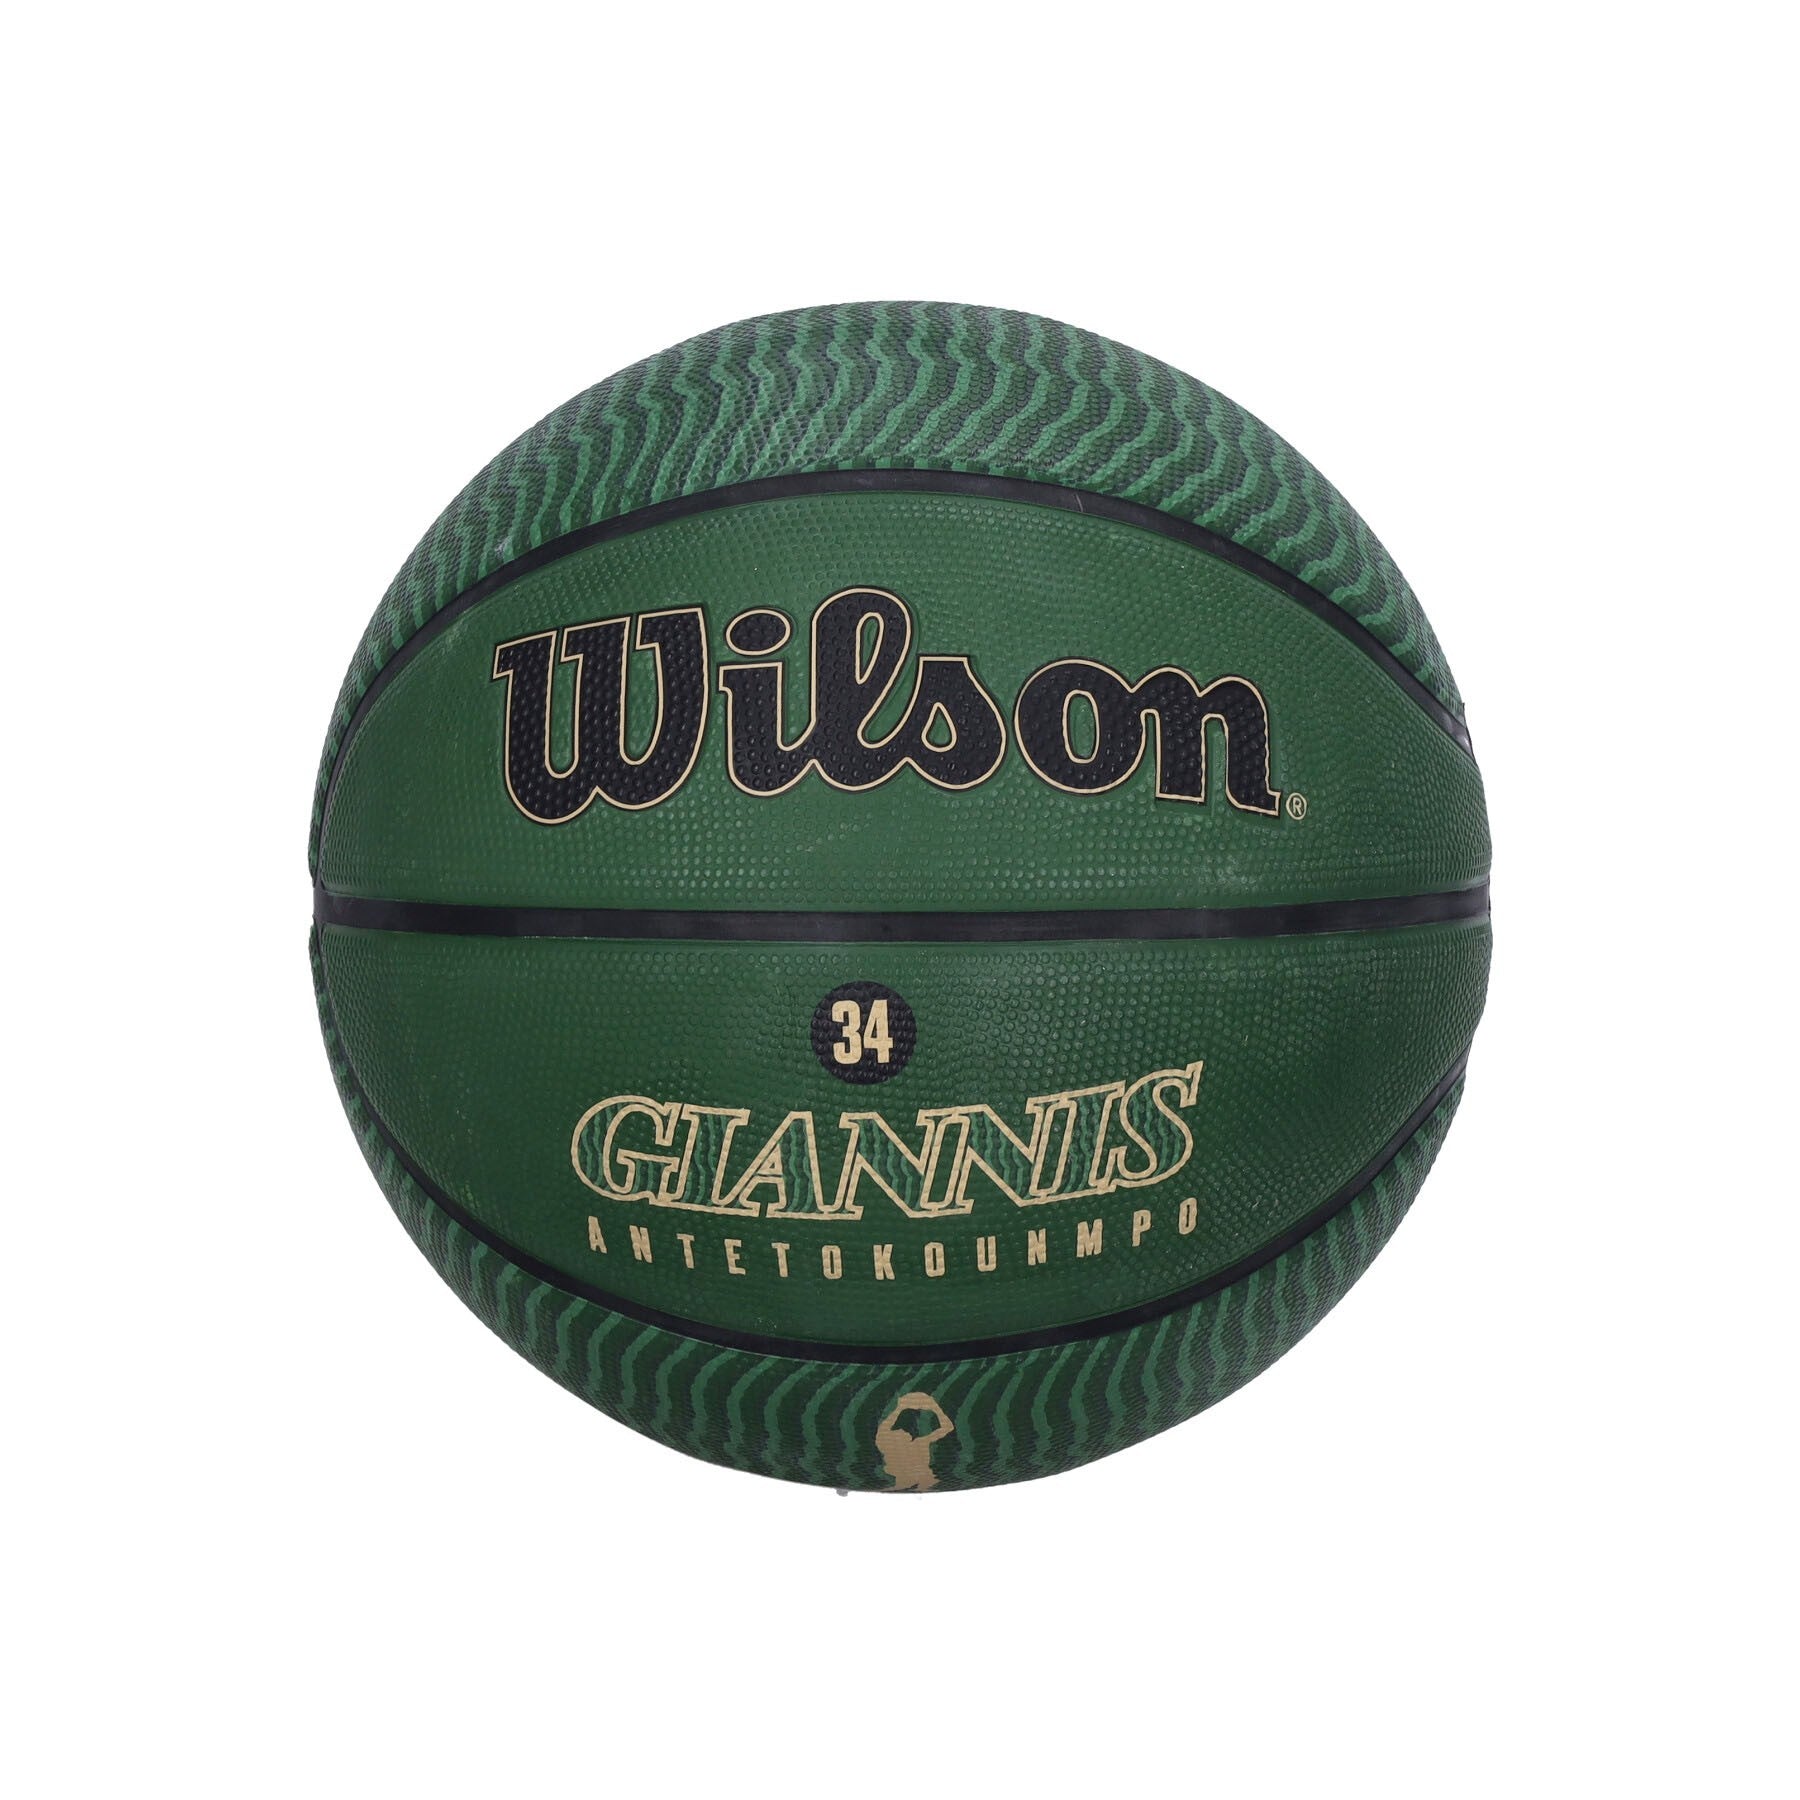 Men's NBA Giannis Antetokounmpo Icon Outdoor Basketball Size 7 Green